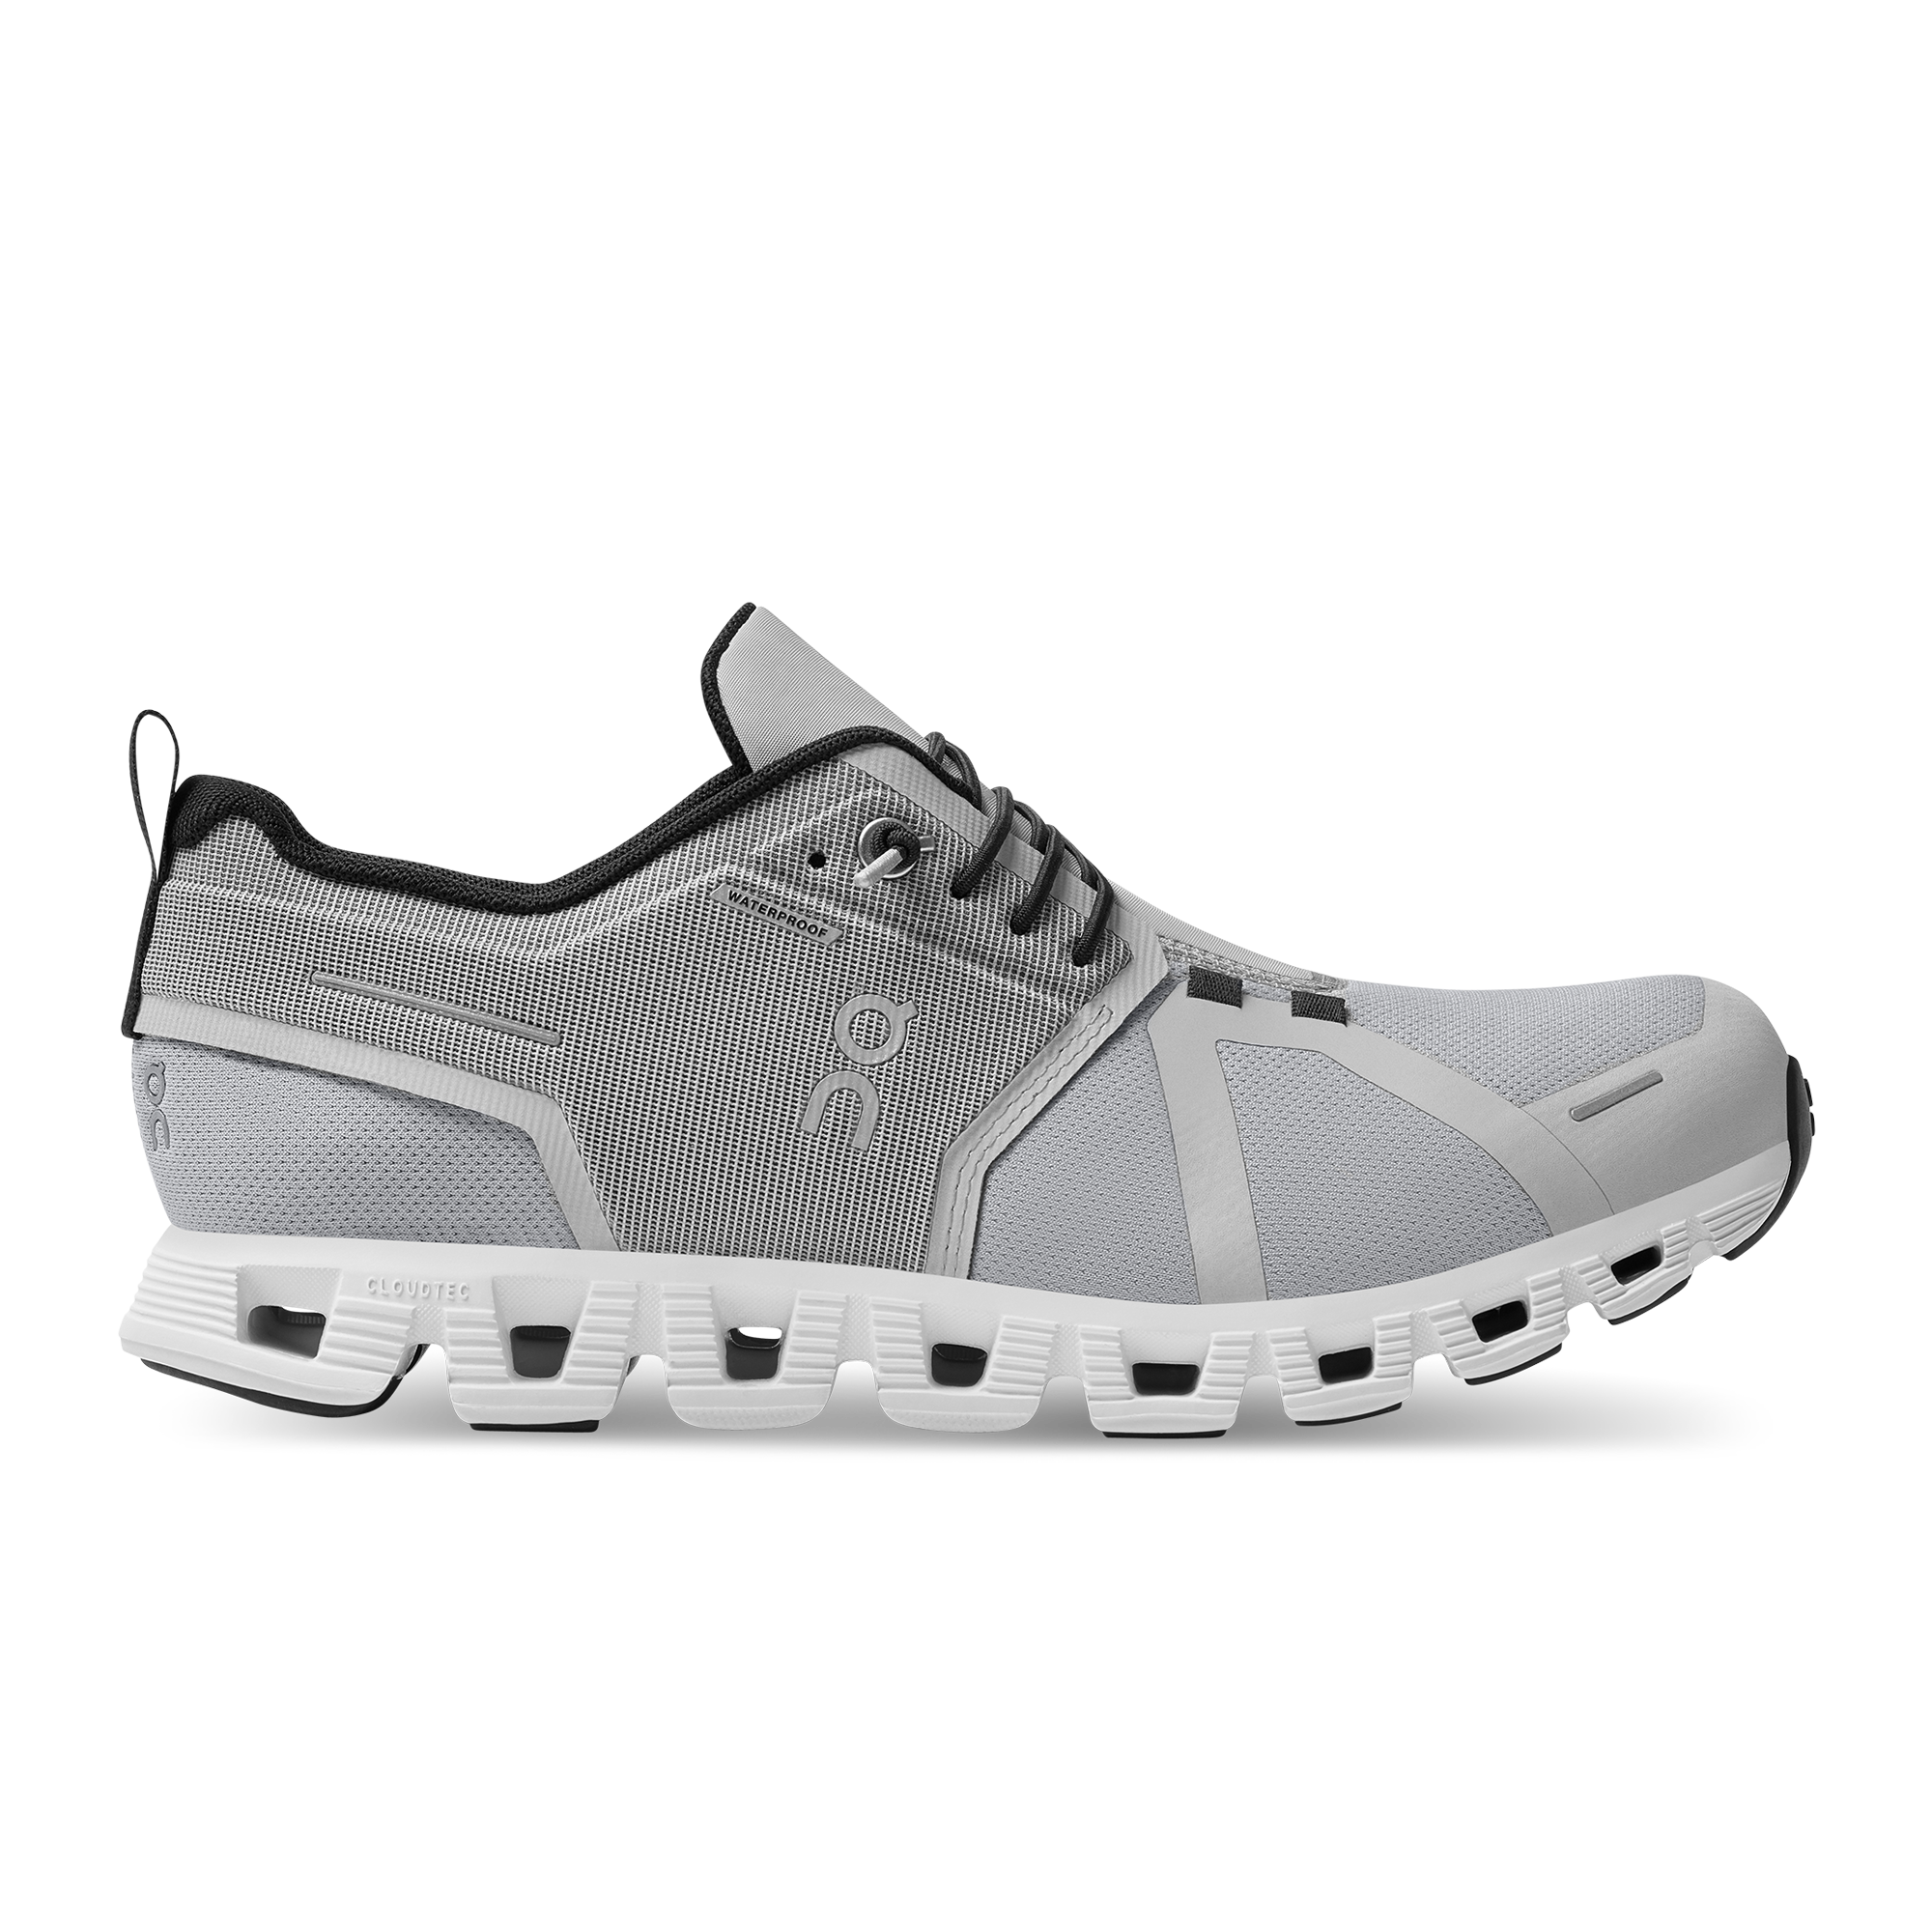 Cloud 5 Waterproof - Lightweight Waterproof Running Shoe | On Latvia